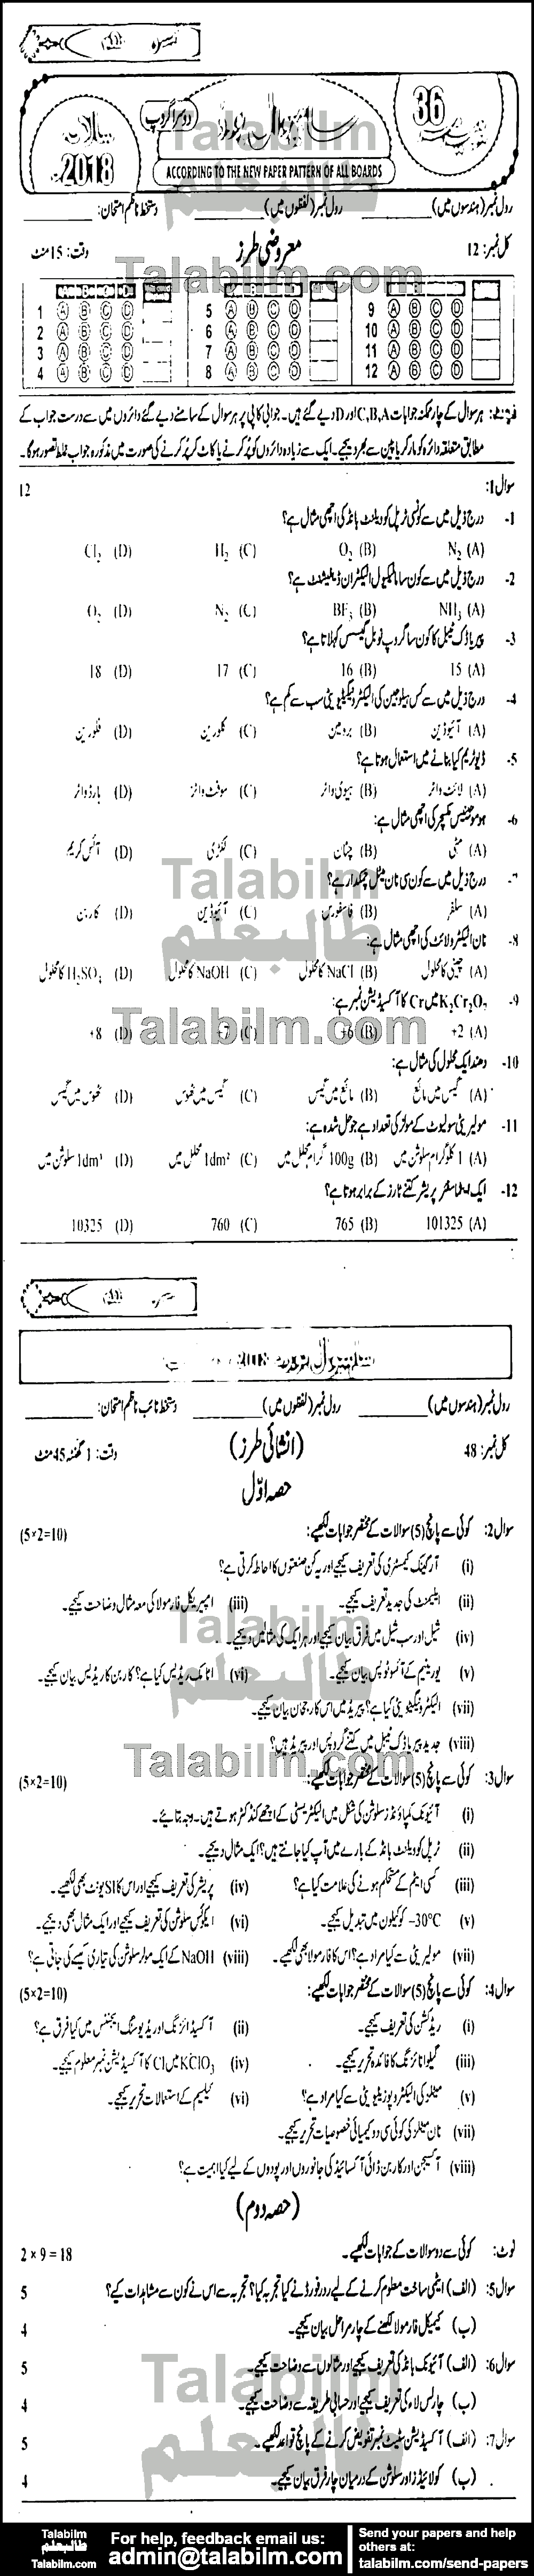 Chemistry 0 past paper for Urdu Medium 2018 Group-II